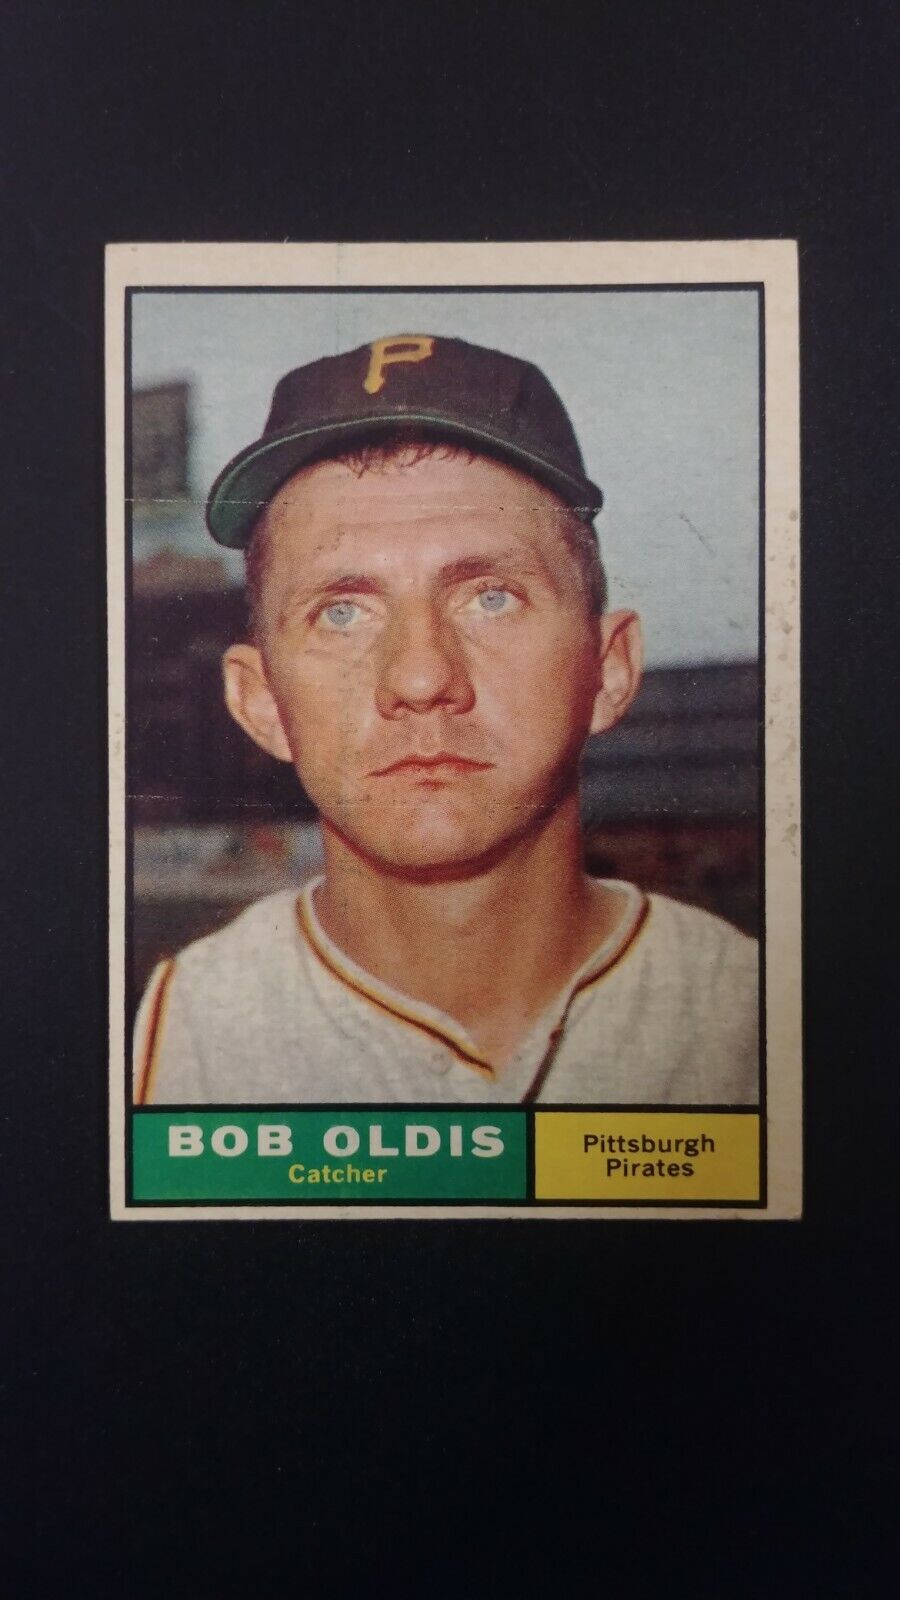 1961 Topps baseball card # 149 Bob Oldis